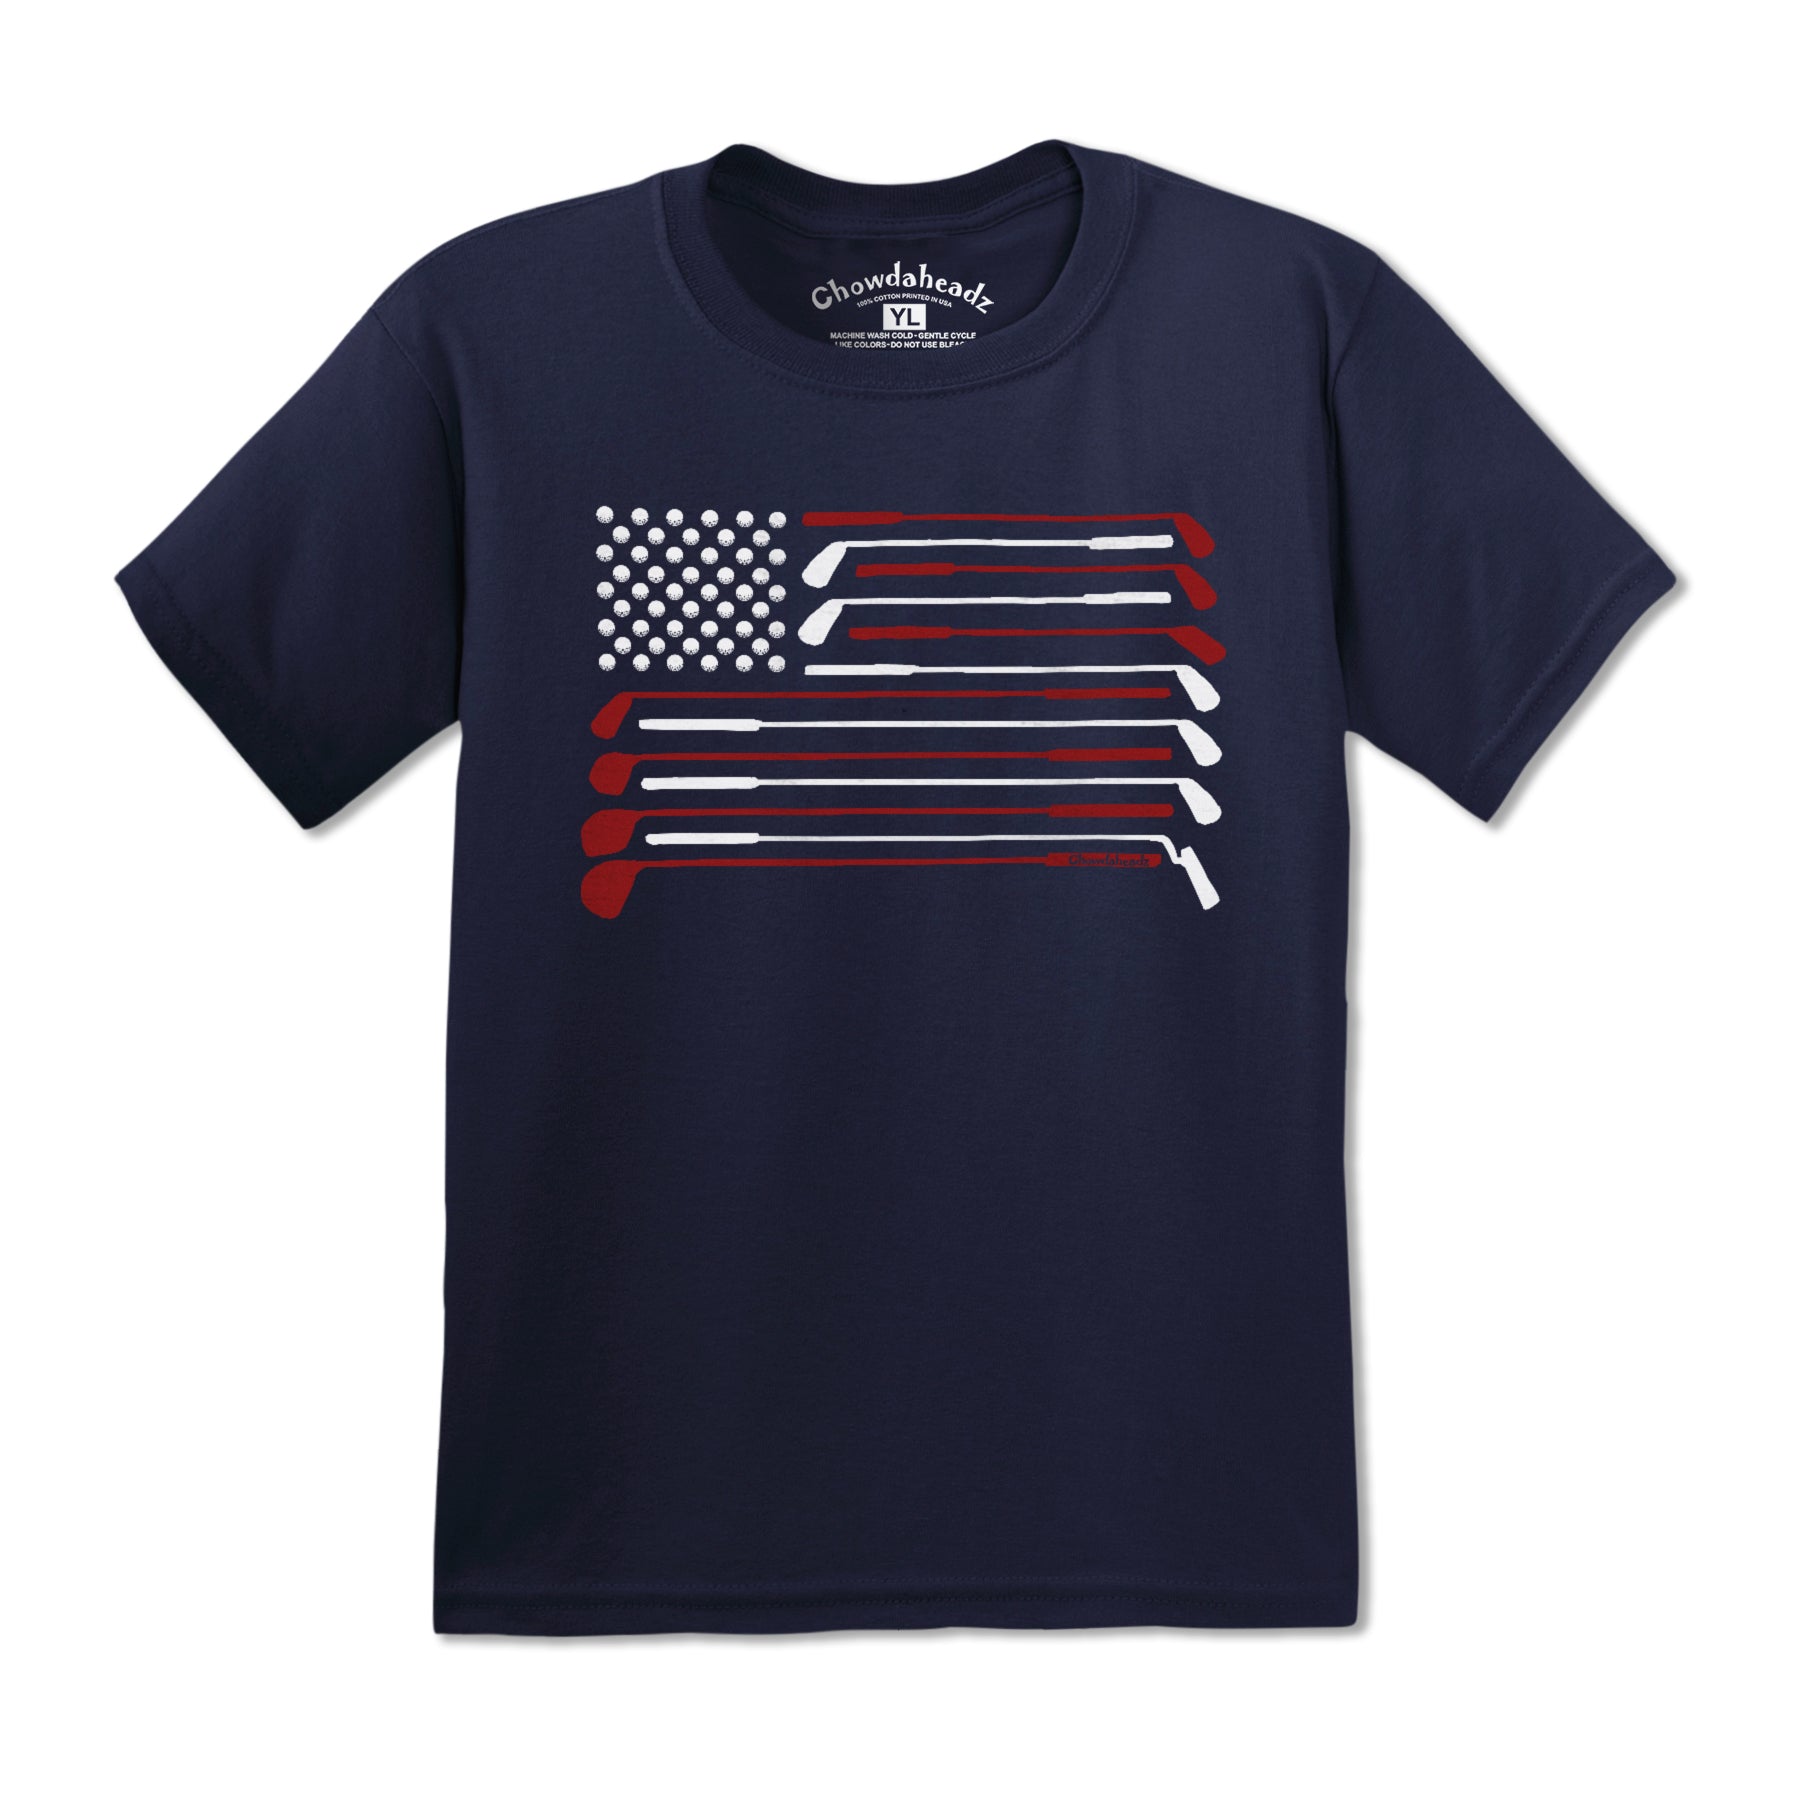 American Golfer Youth T-Shirt - Chowdaheadz